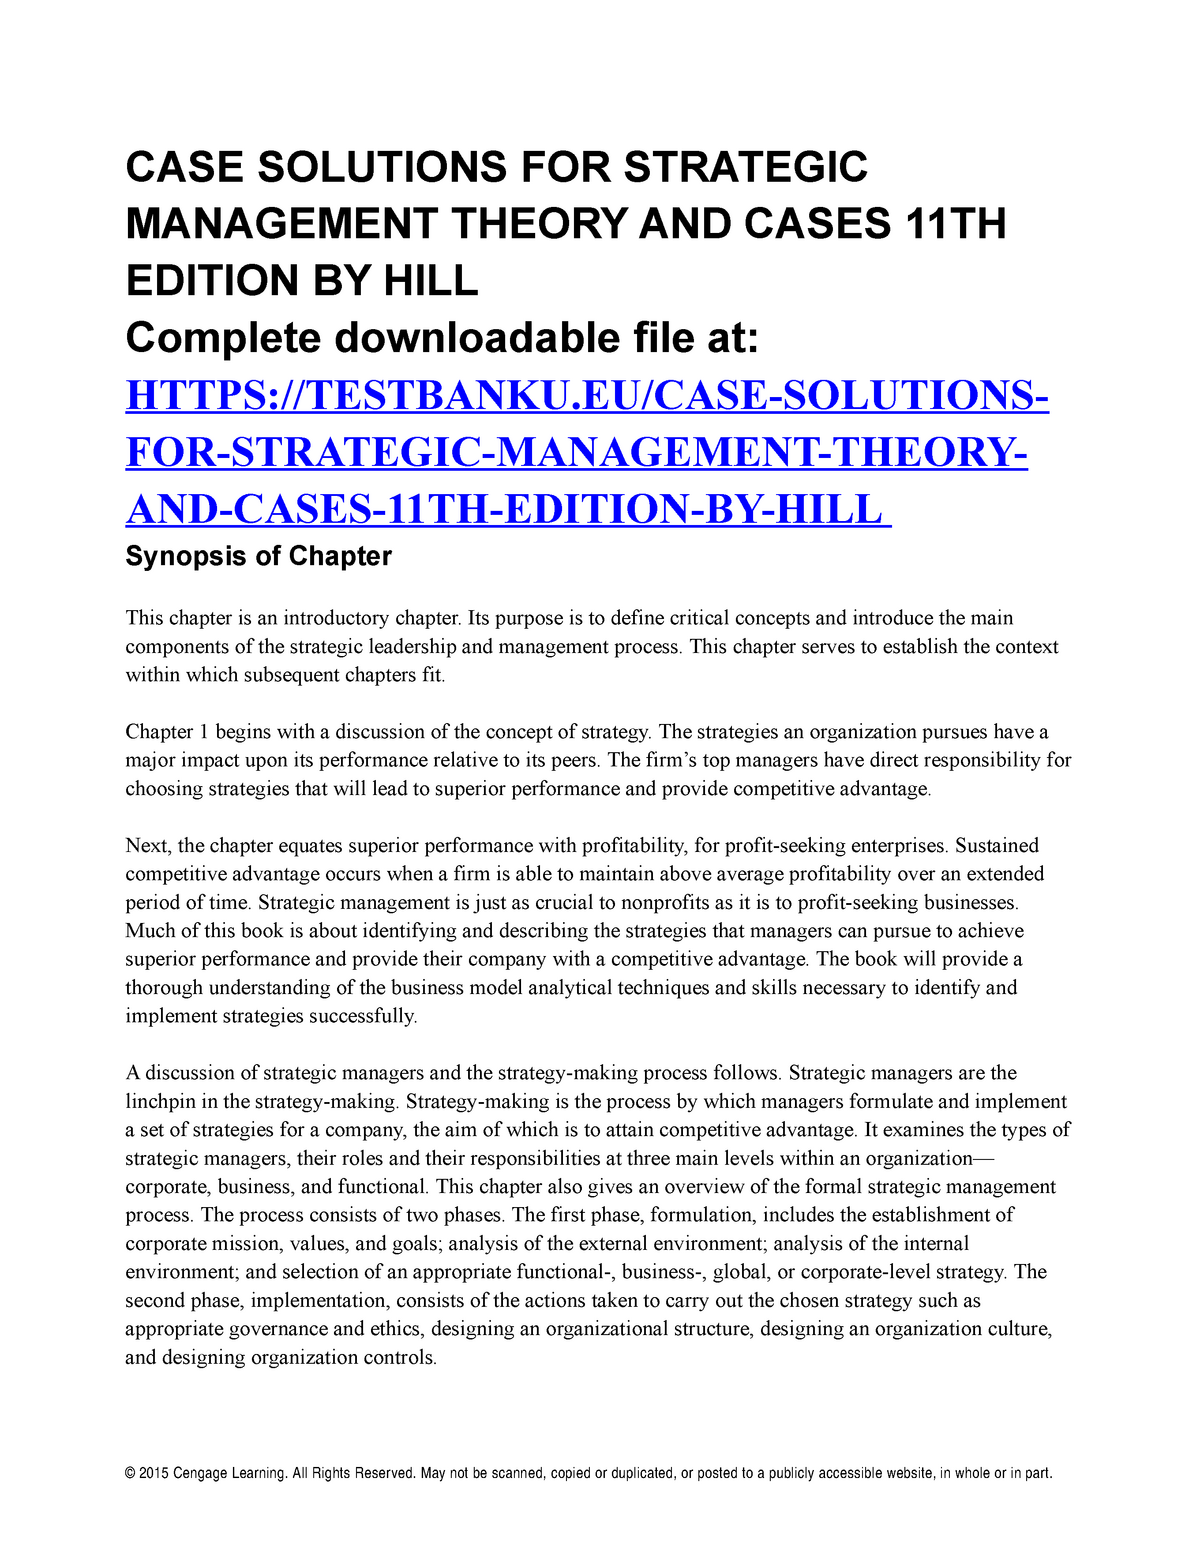 hp case study strategic management pdf